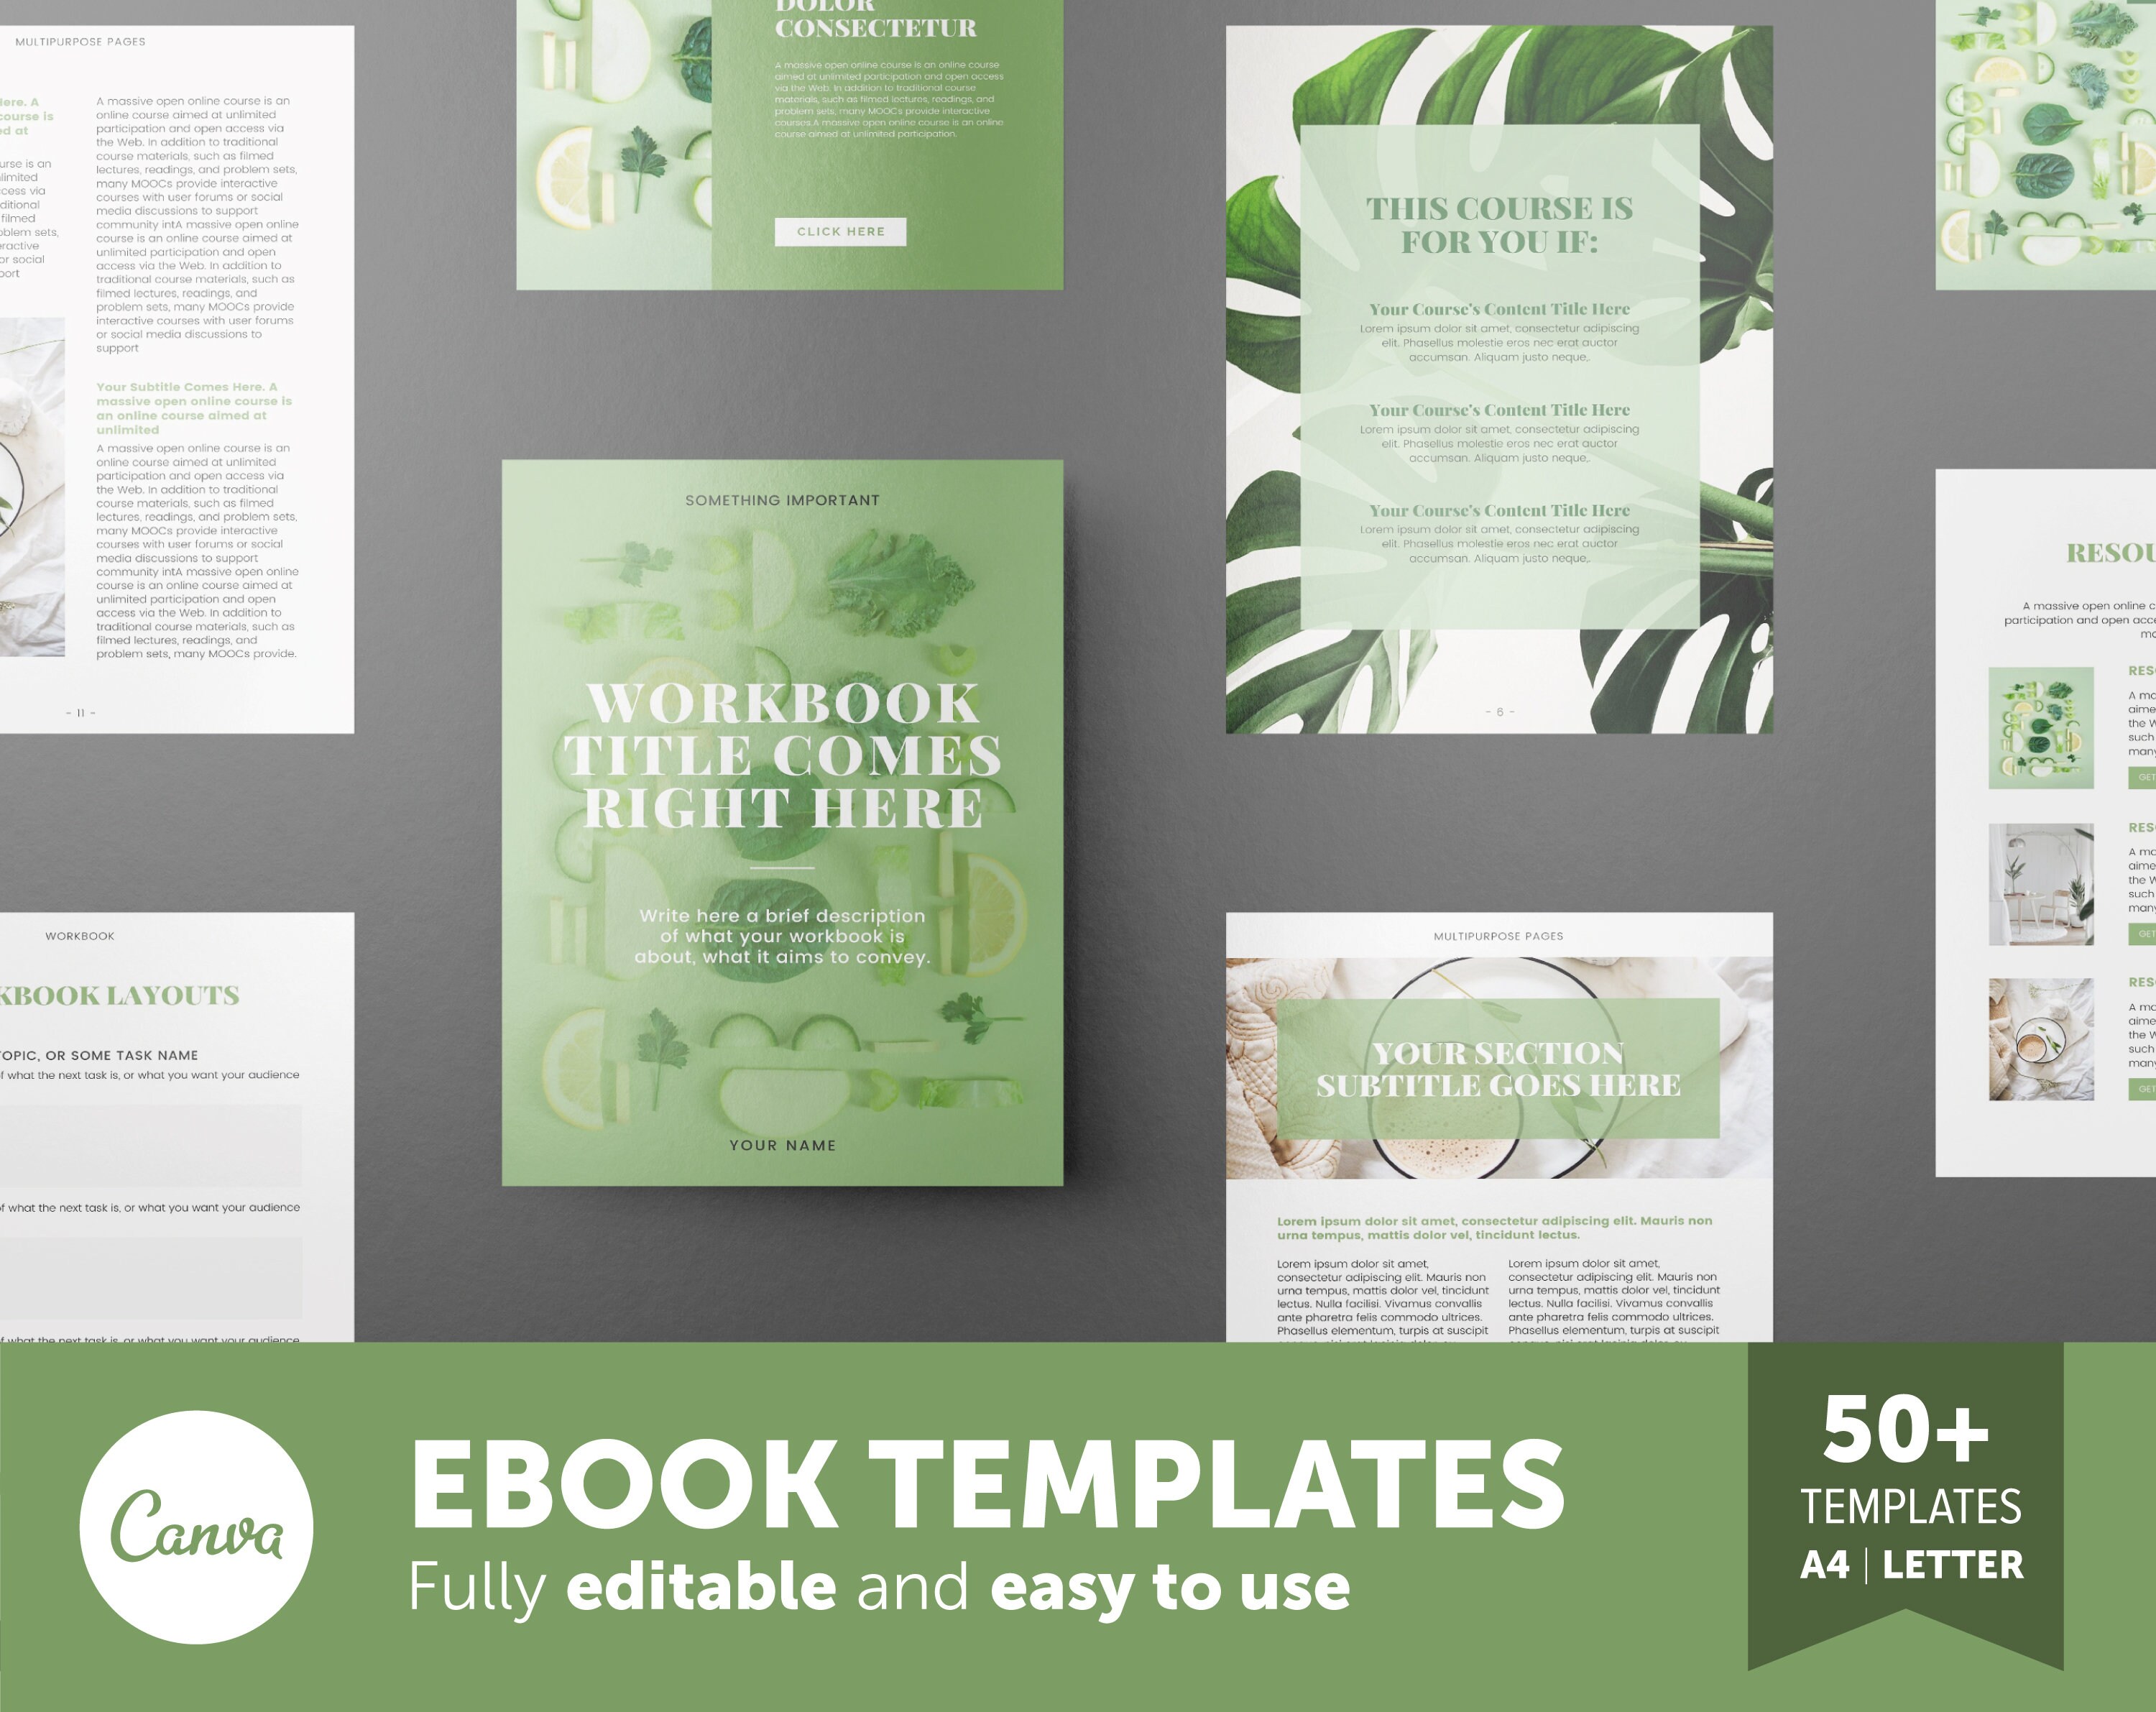 50 Ebook Templates for Canva Editable Workbook Template | Etsy